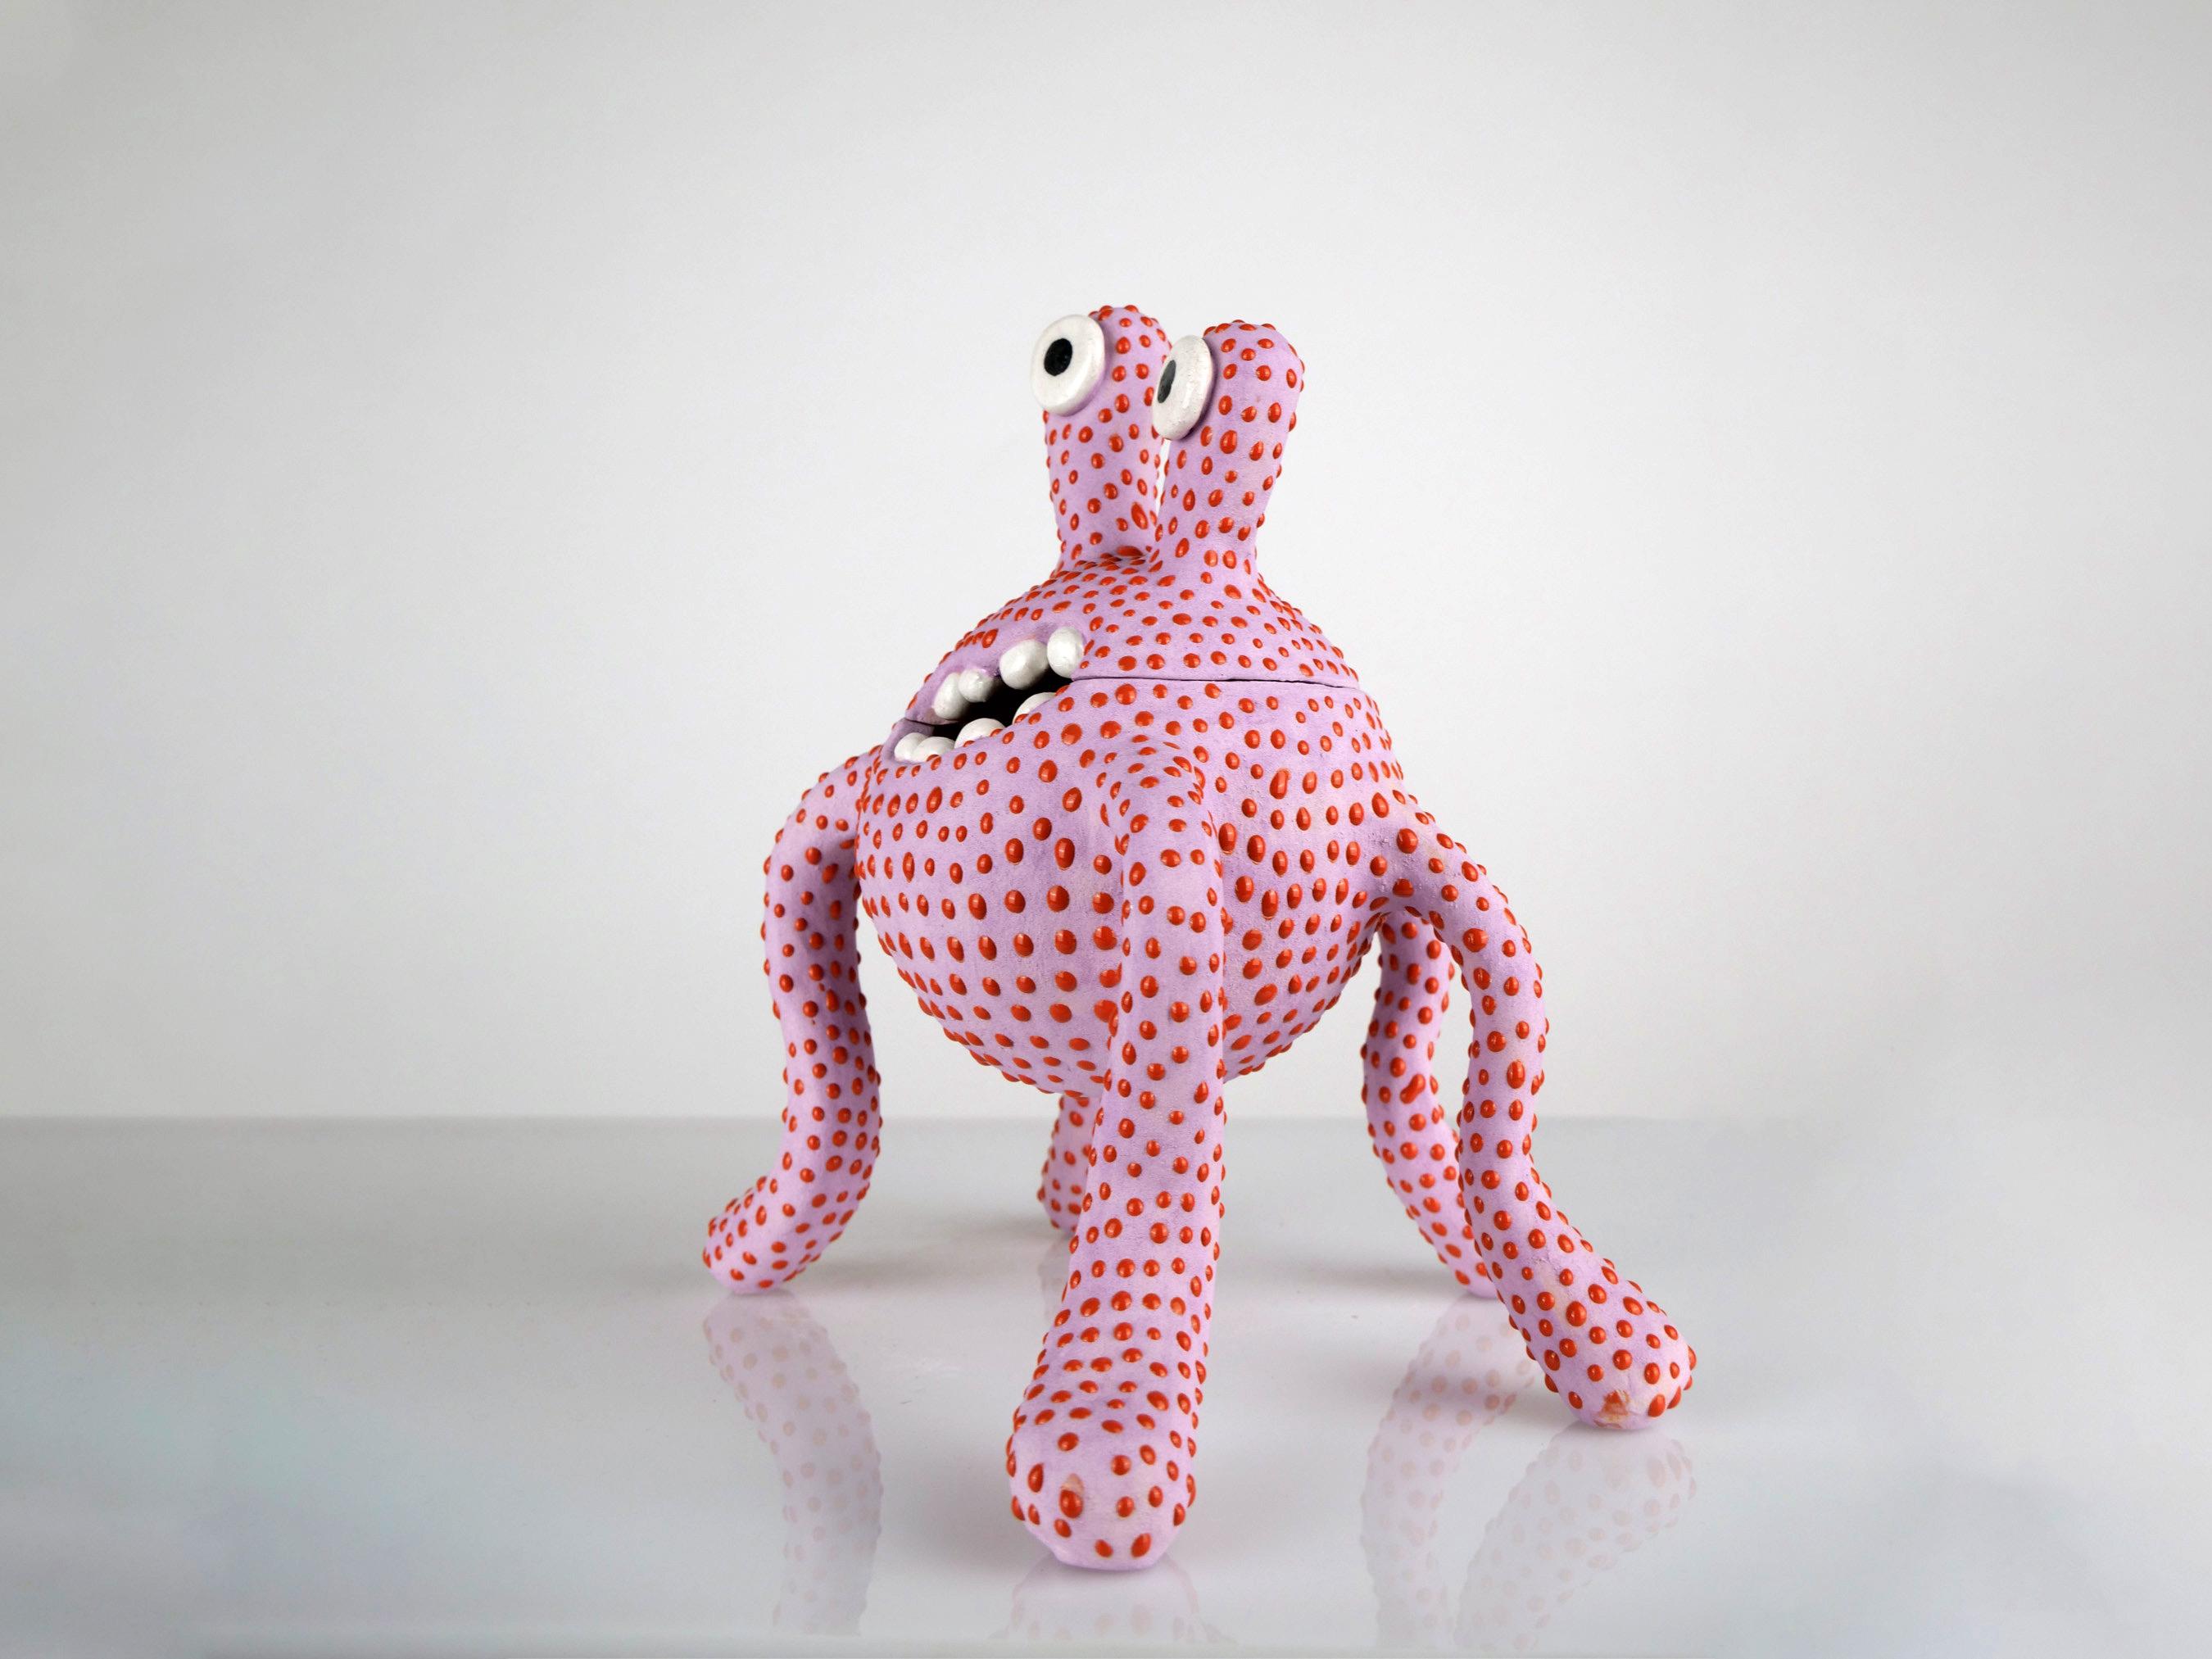 British 'Octopus' Monster Sculpture